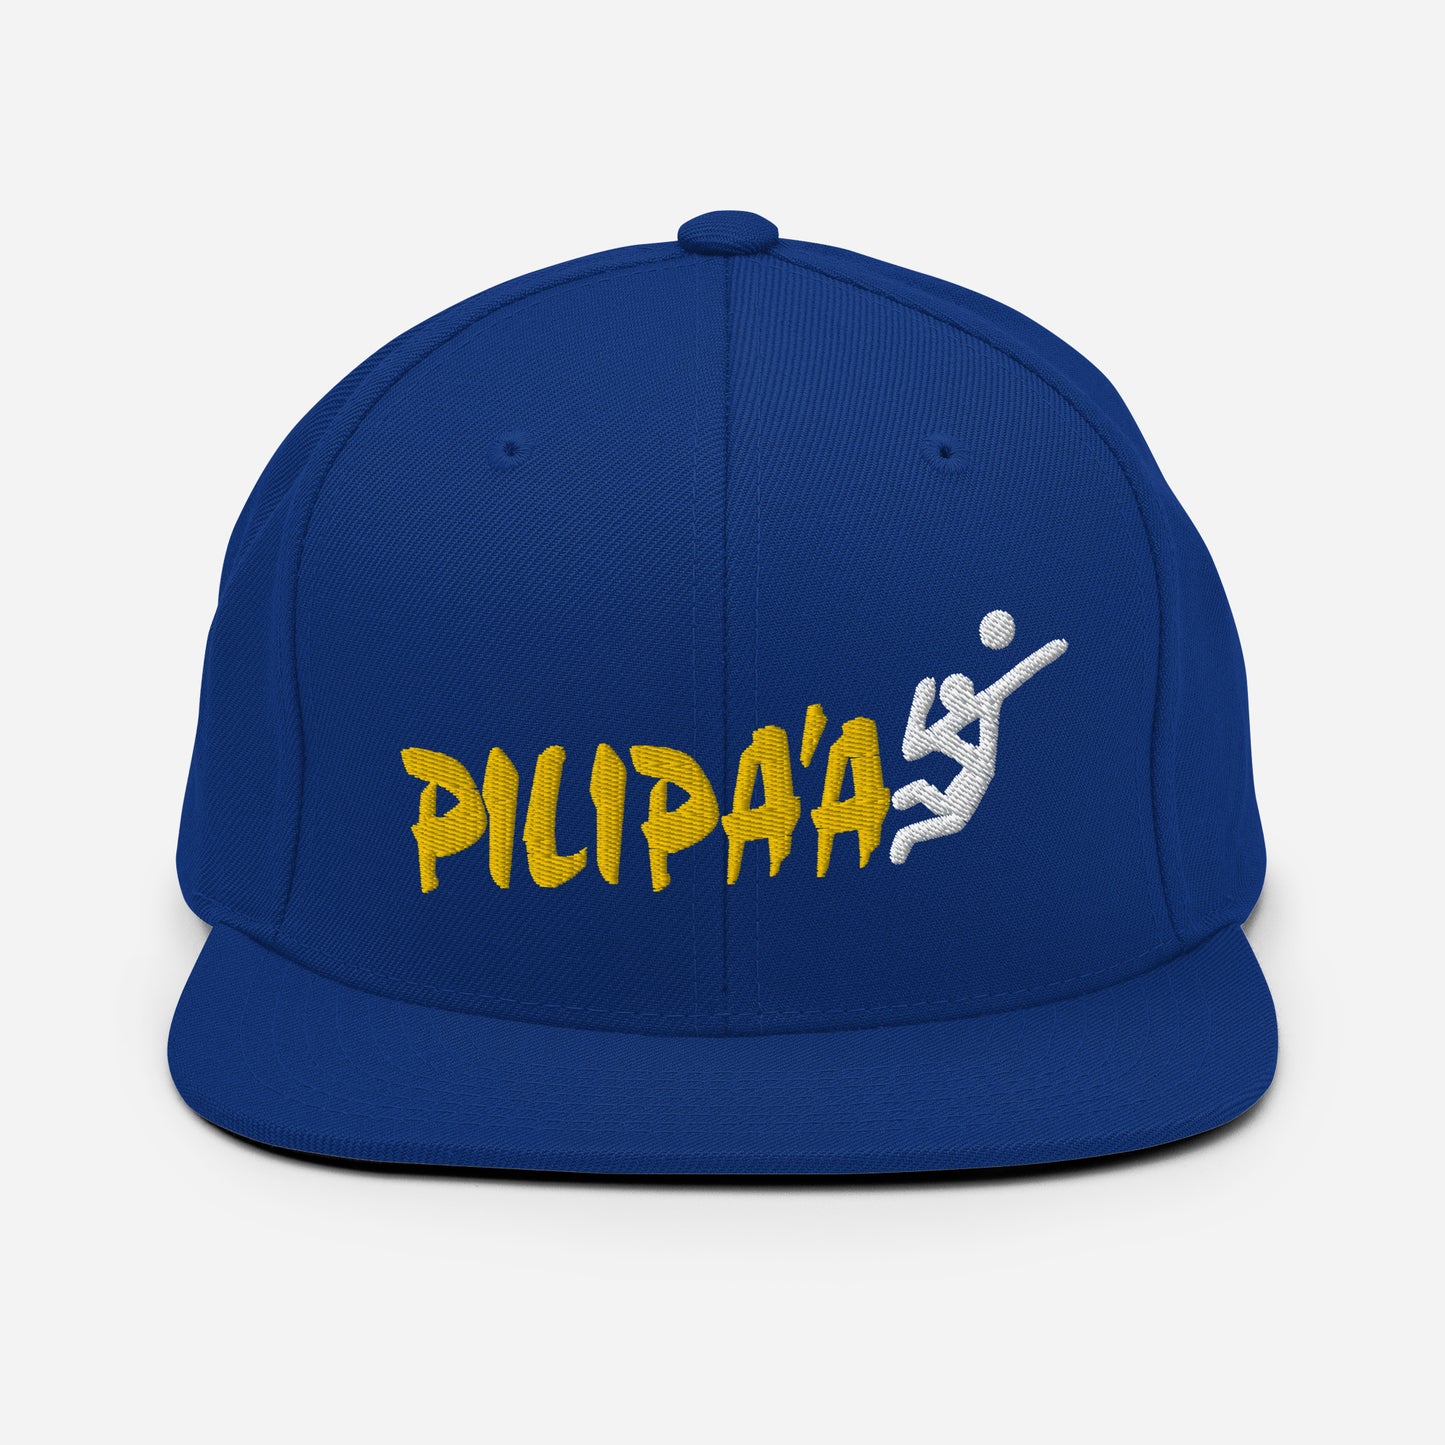 Pilipa'a Embroidered Snapback